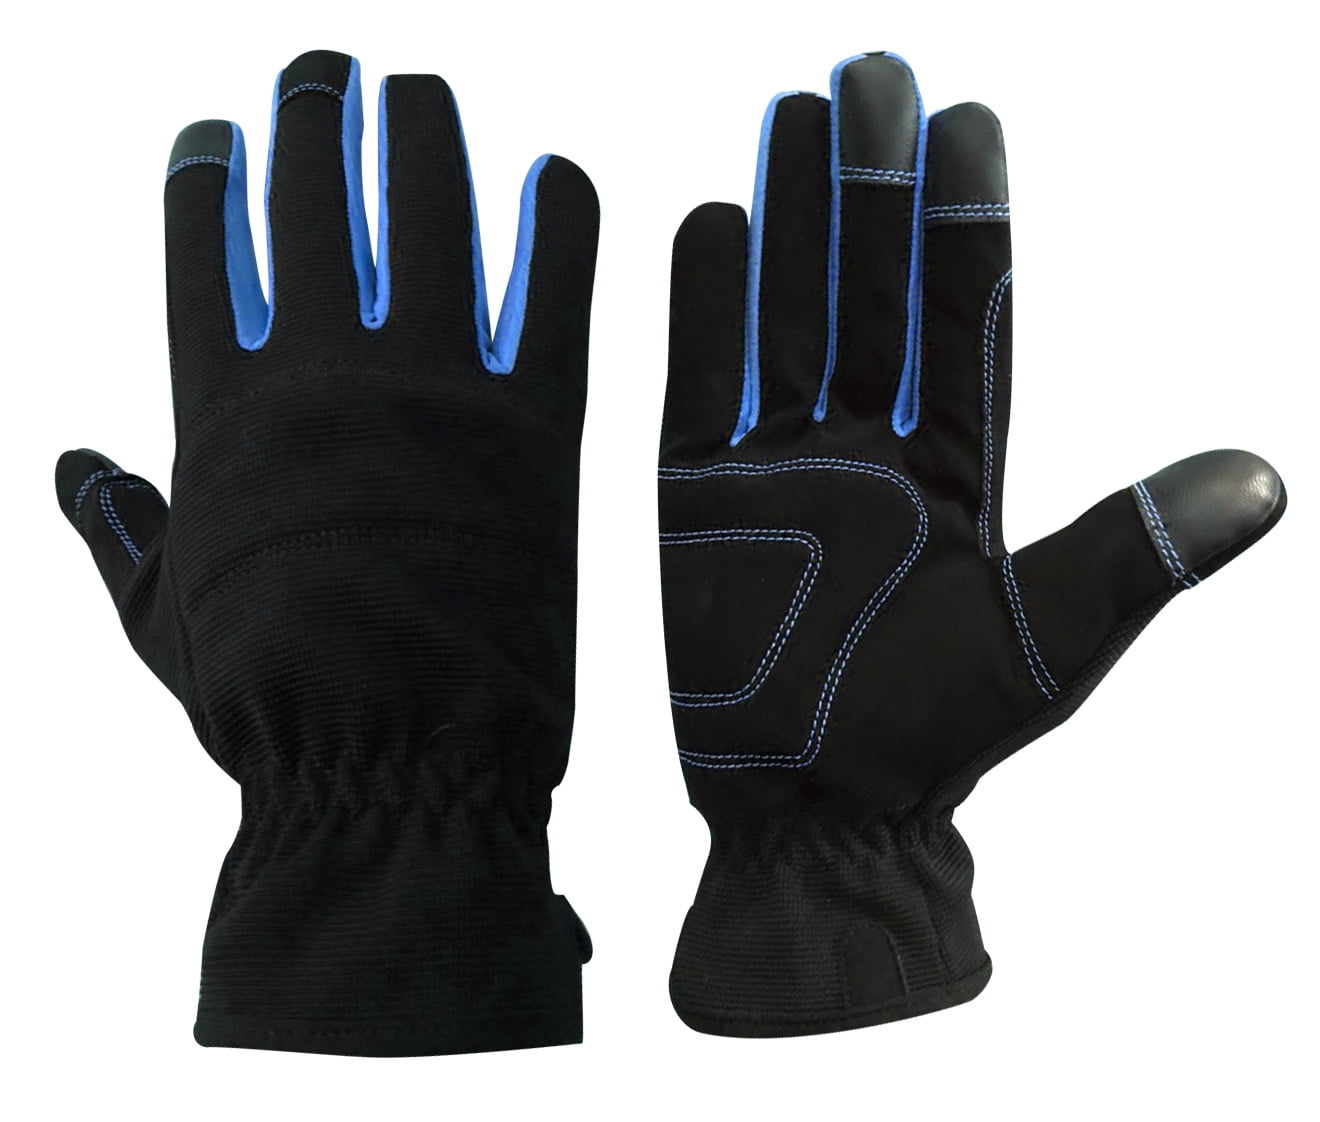 Mechanix Wear Utility Gloves (Medium, Black/Grey)